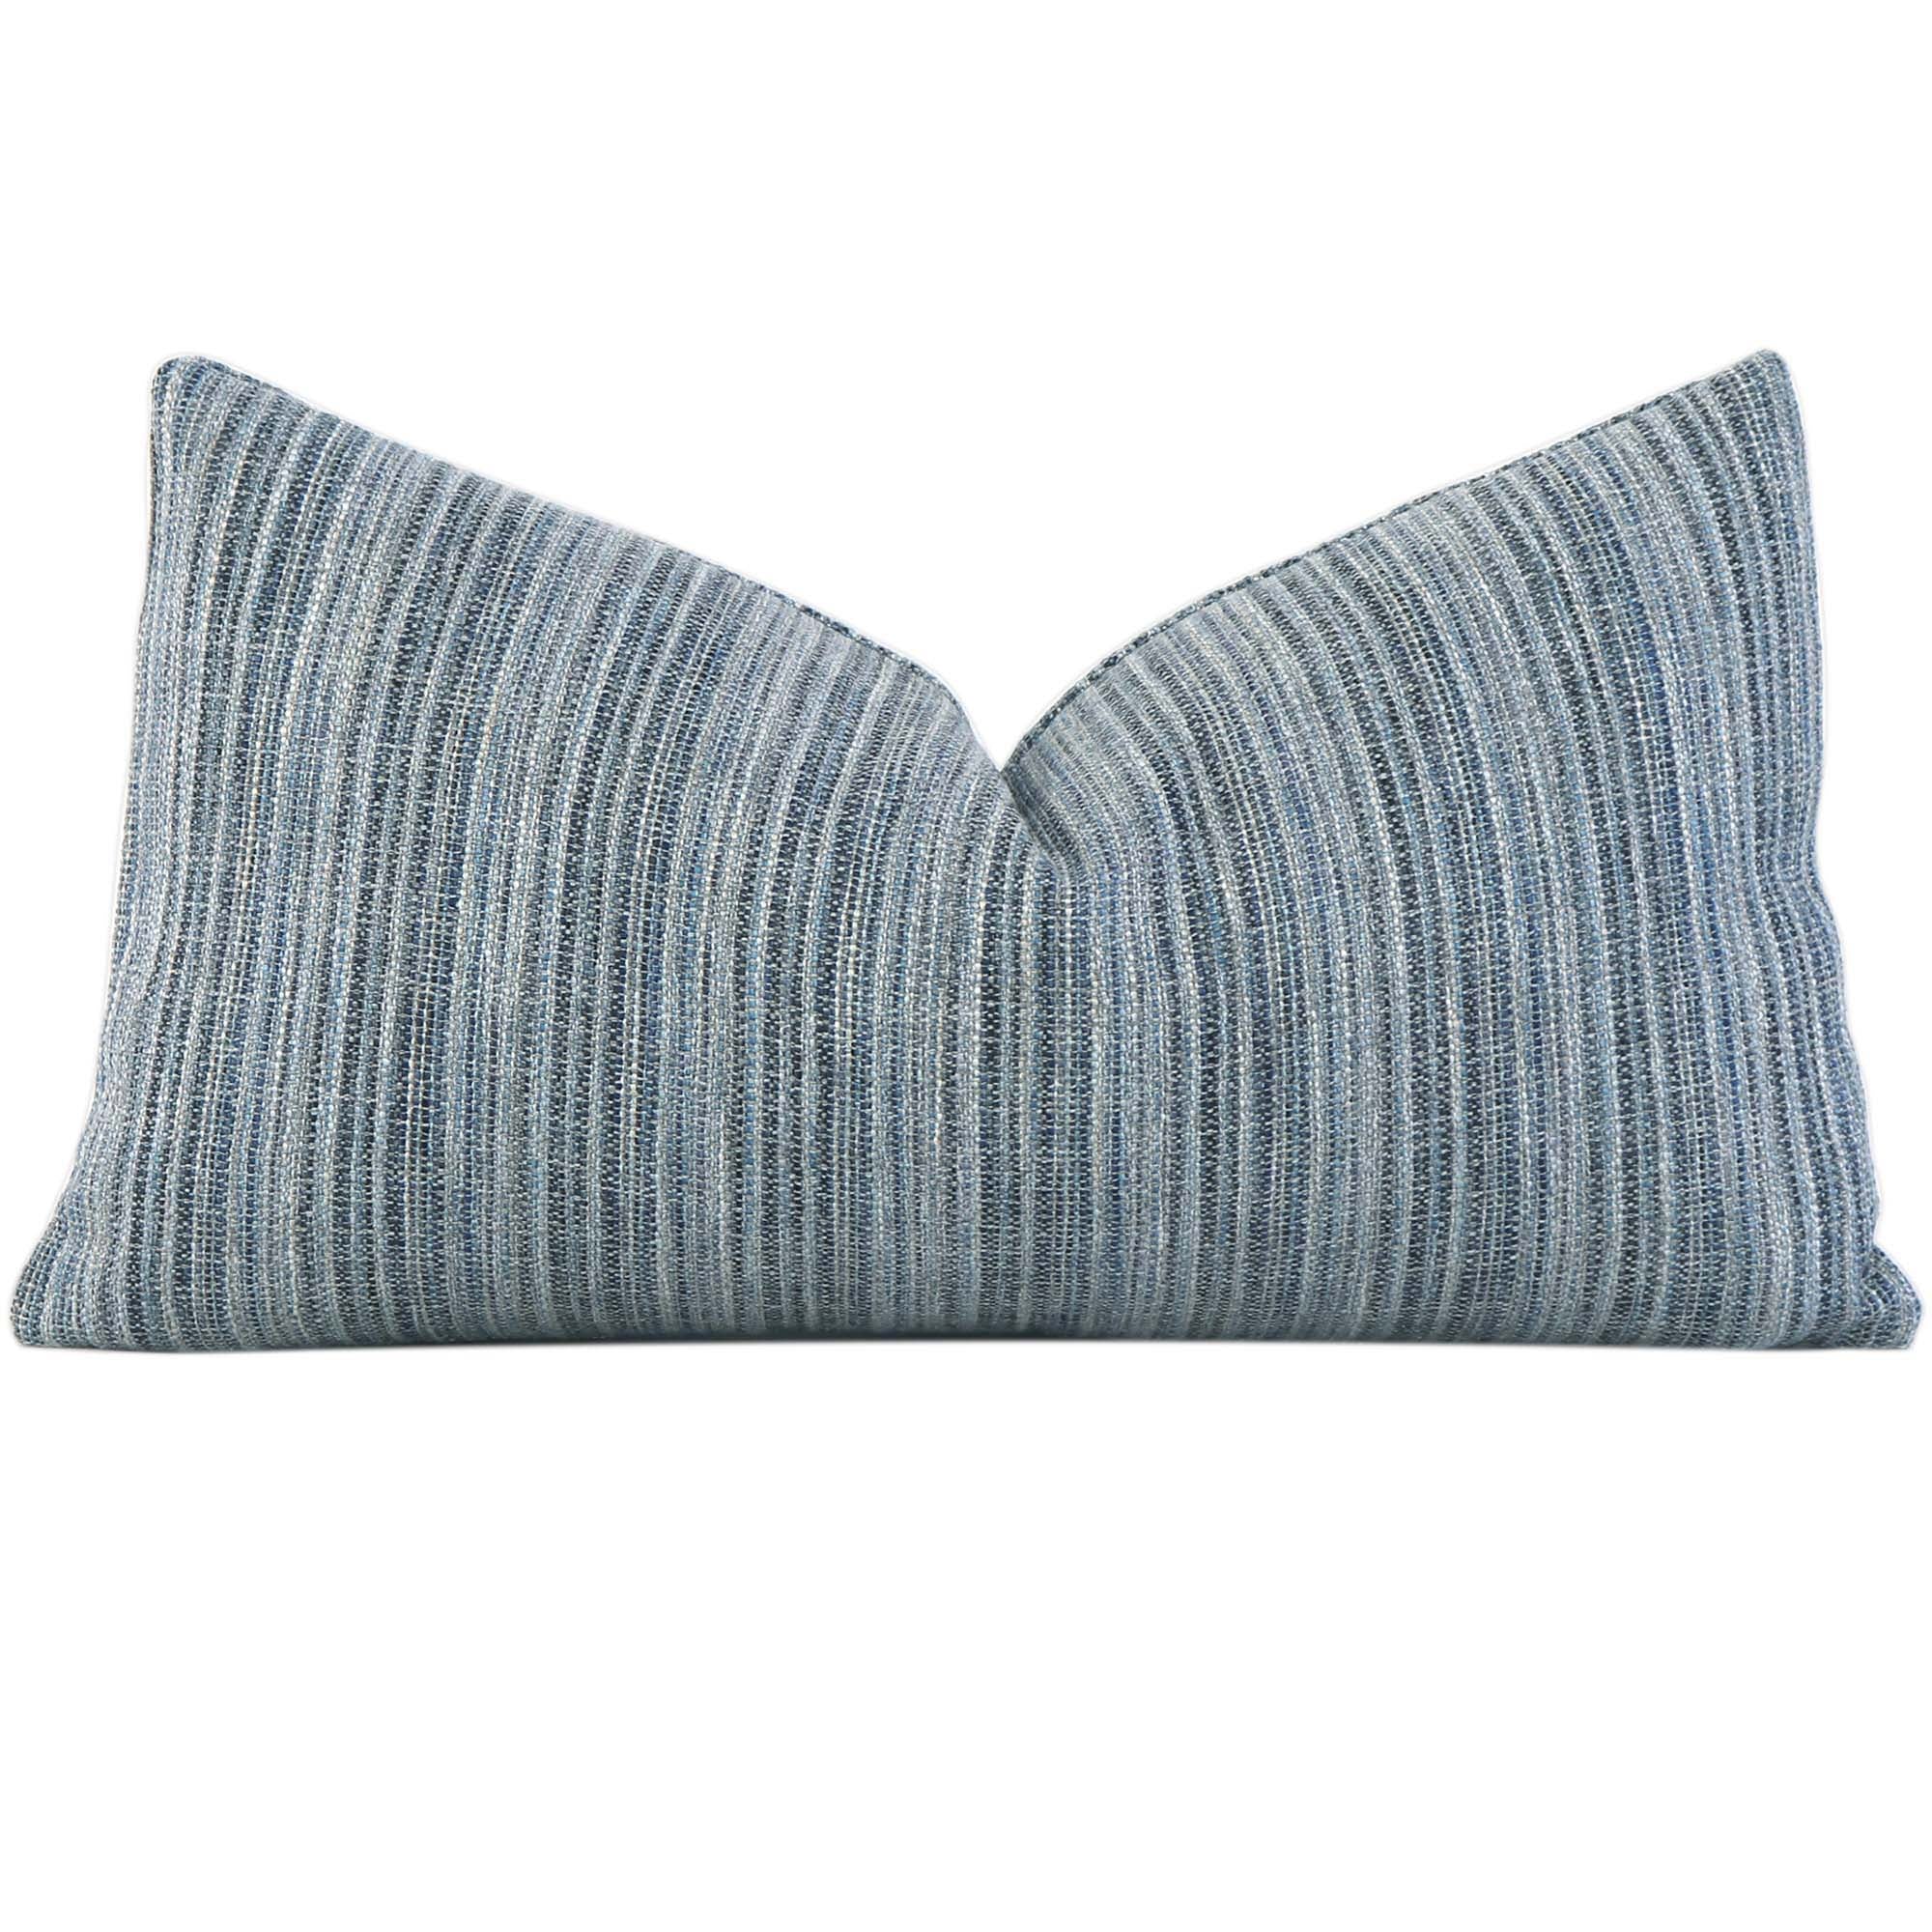 Schumacher Formentera Denim Textured Stripe Decorative Lumbar Throw Pillow Cover